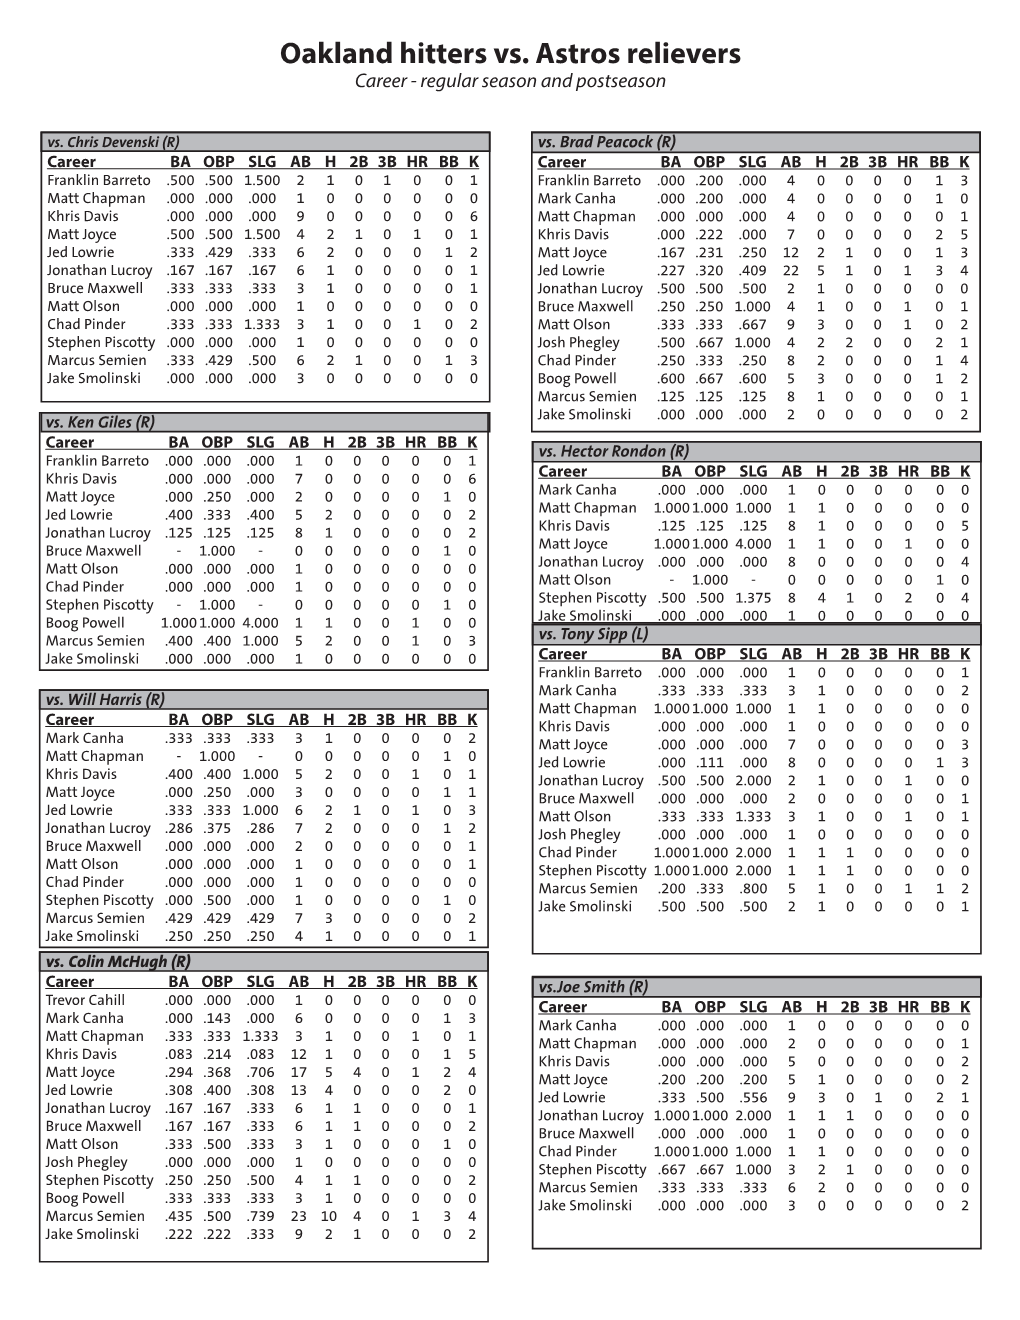 Oakland Hitters Vs. Astros Relievers Career - Regular Season and Postseason Vs